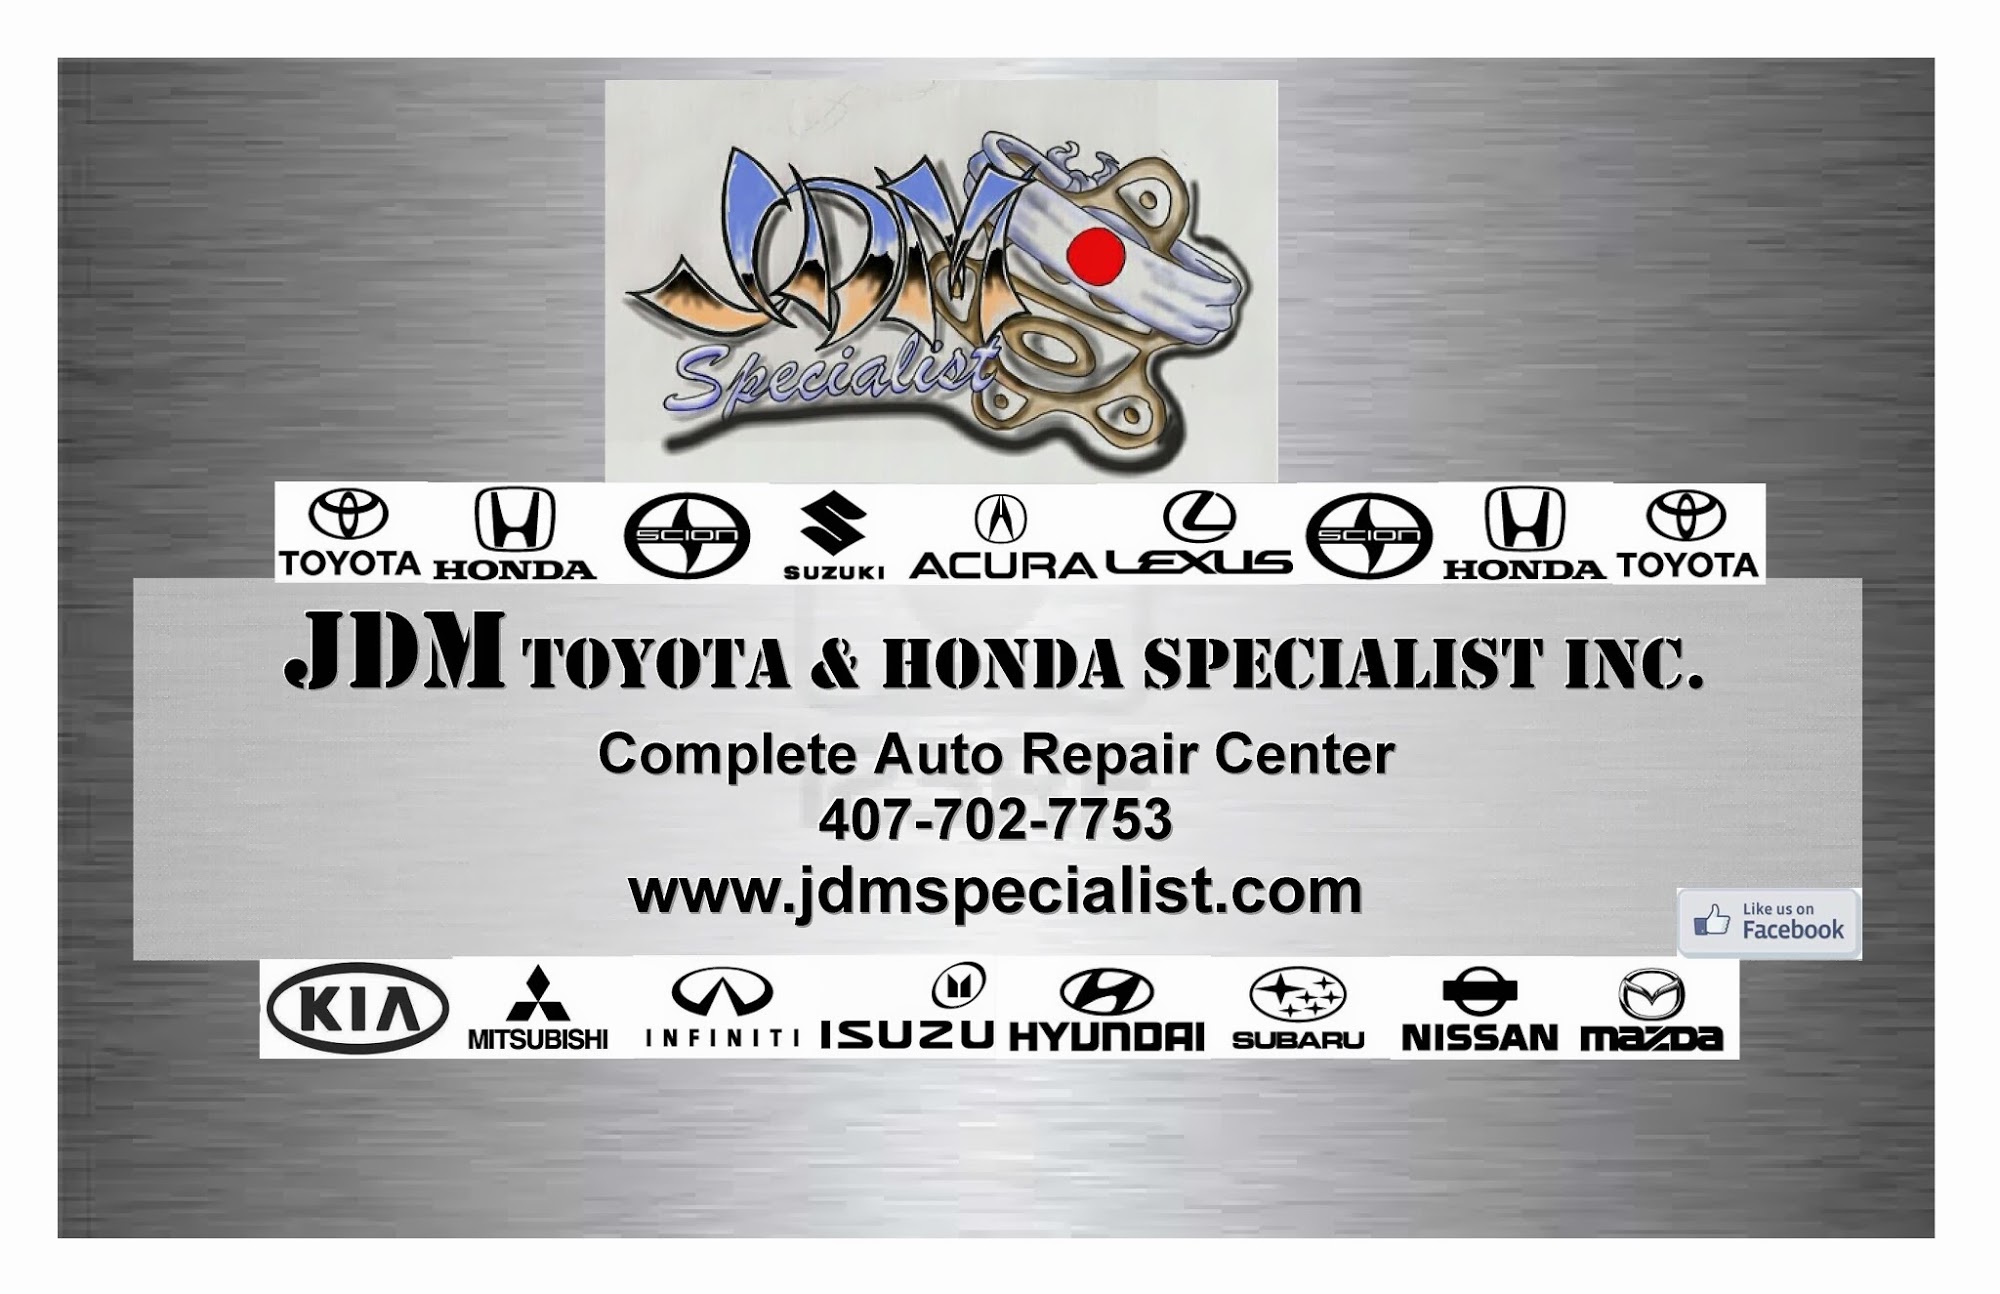 JDM Toyota & Honda Specialist